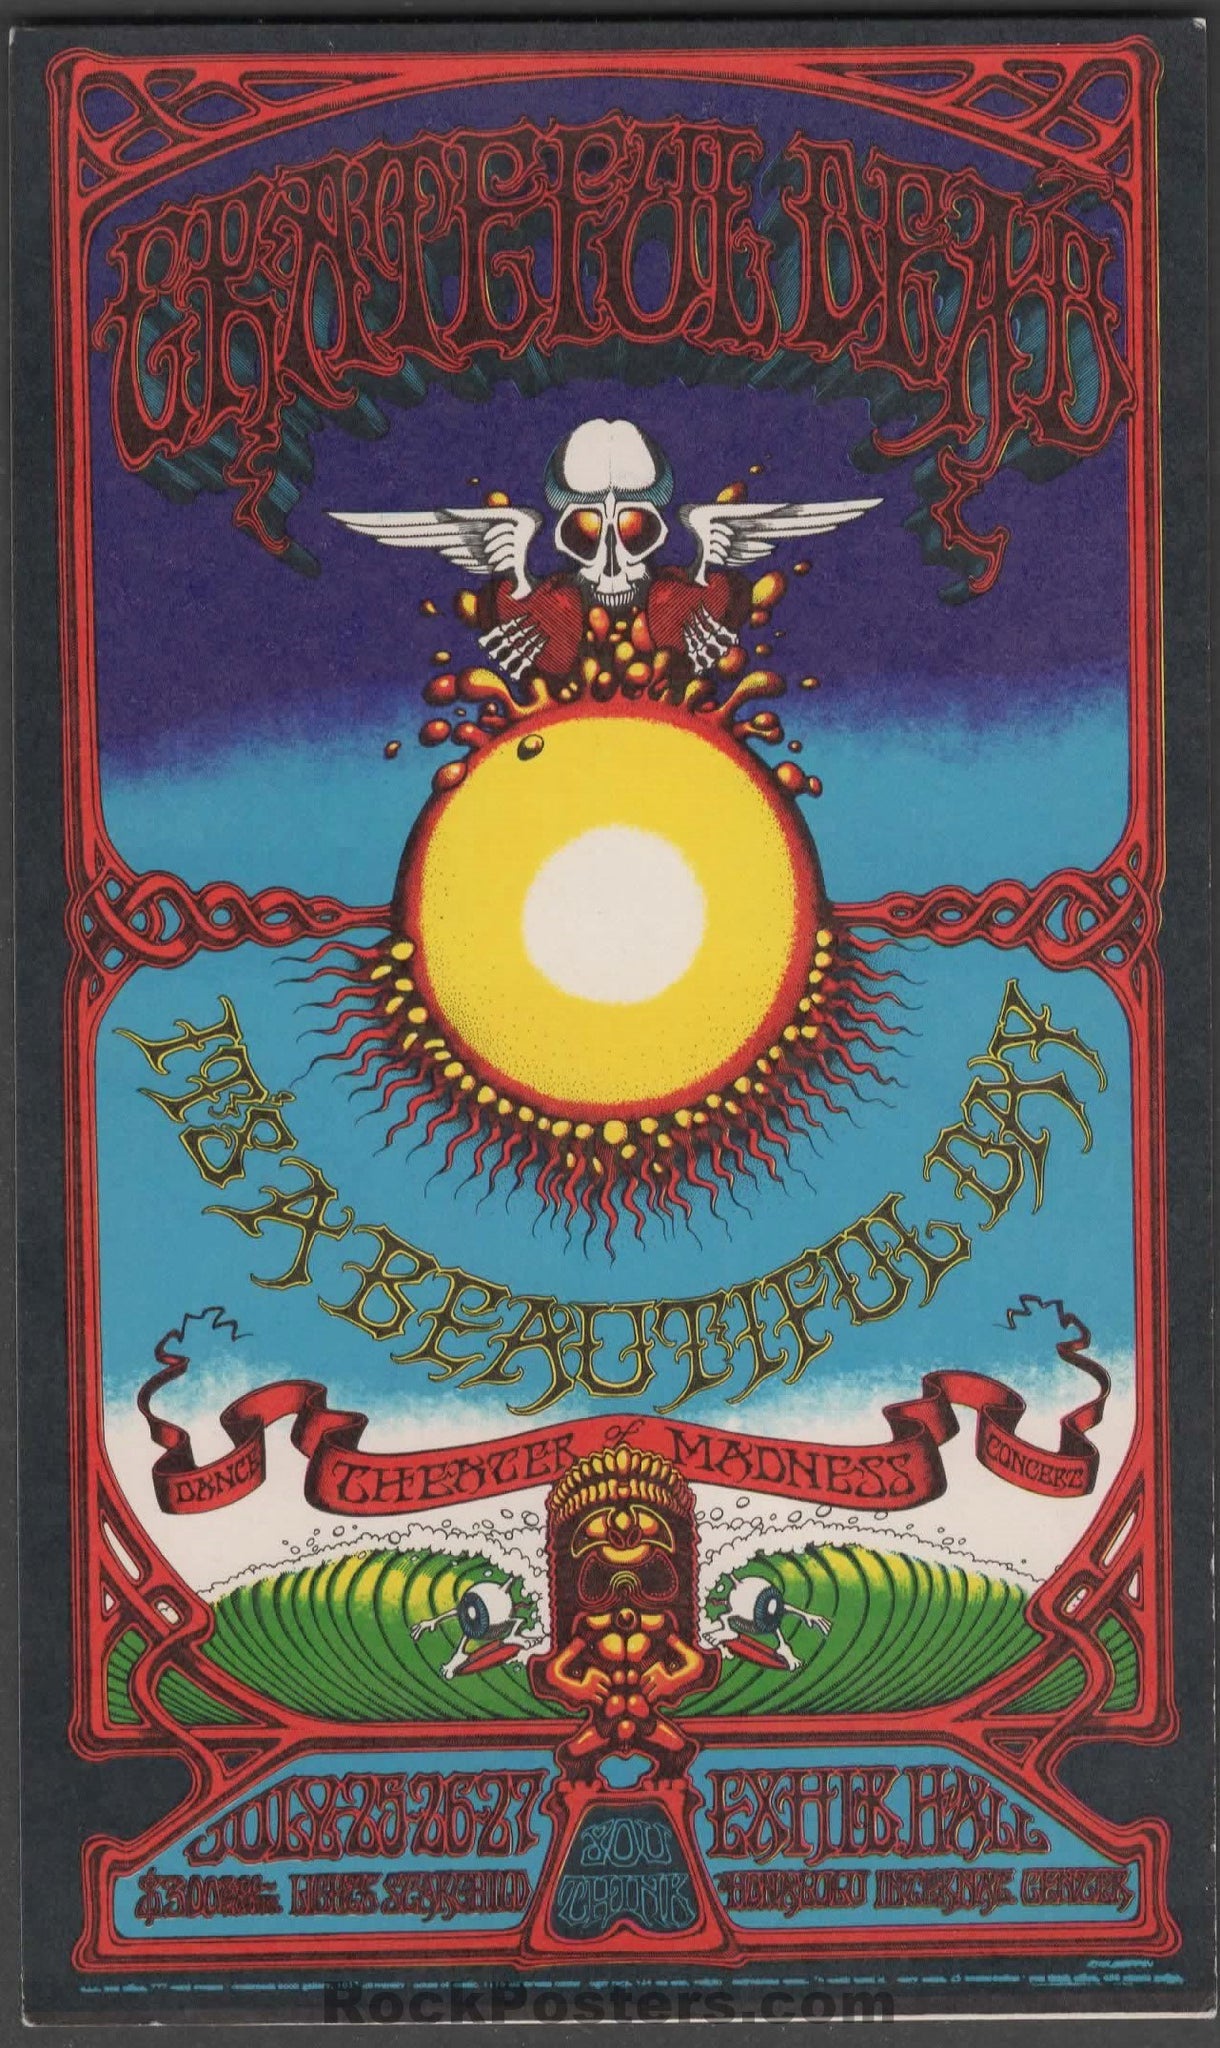 AUCTION - AOR 3.116 - Grateful Dead - Hawaiian Aoxomoxoa - 1968 Handbill - Near Mint Minus